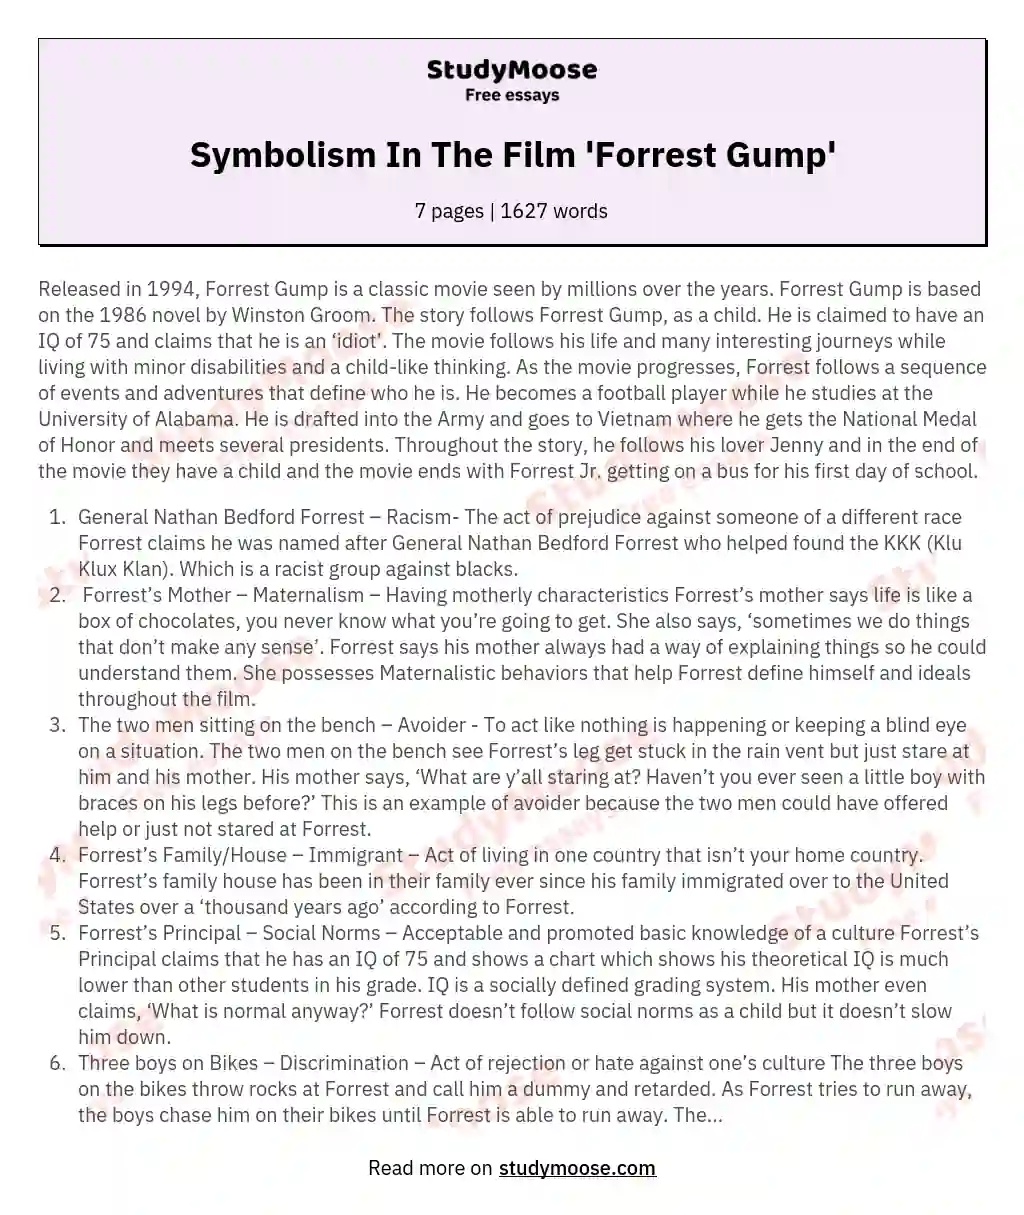 Symbolism In The Film 'Forrest Gump'